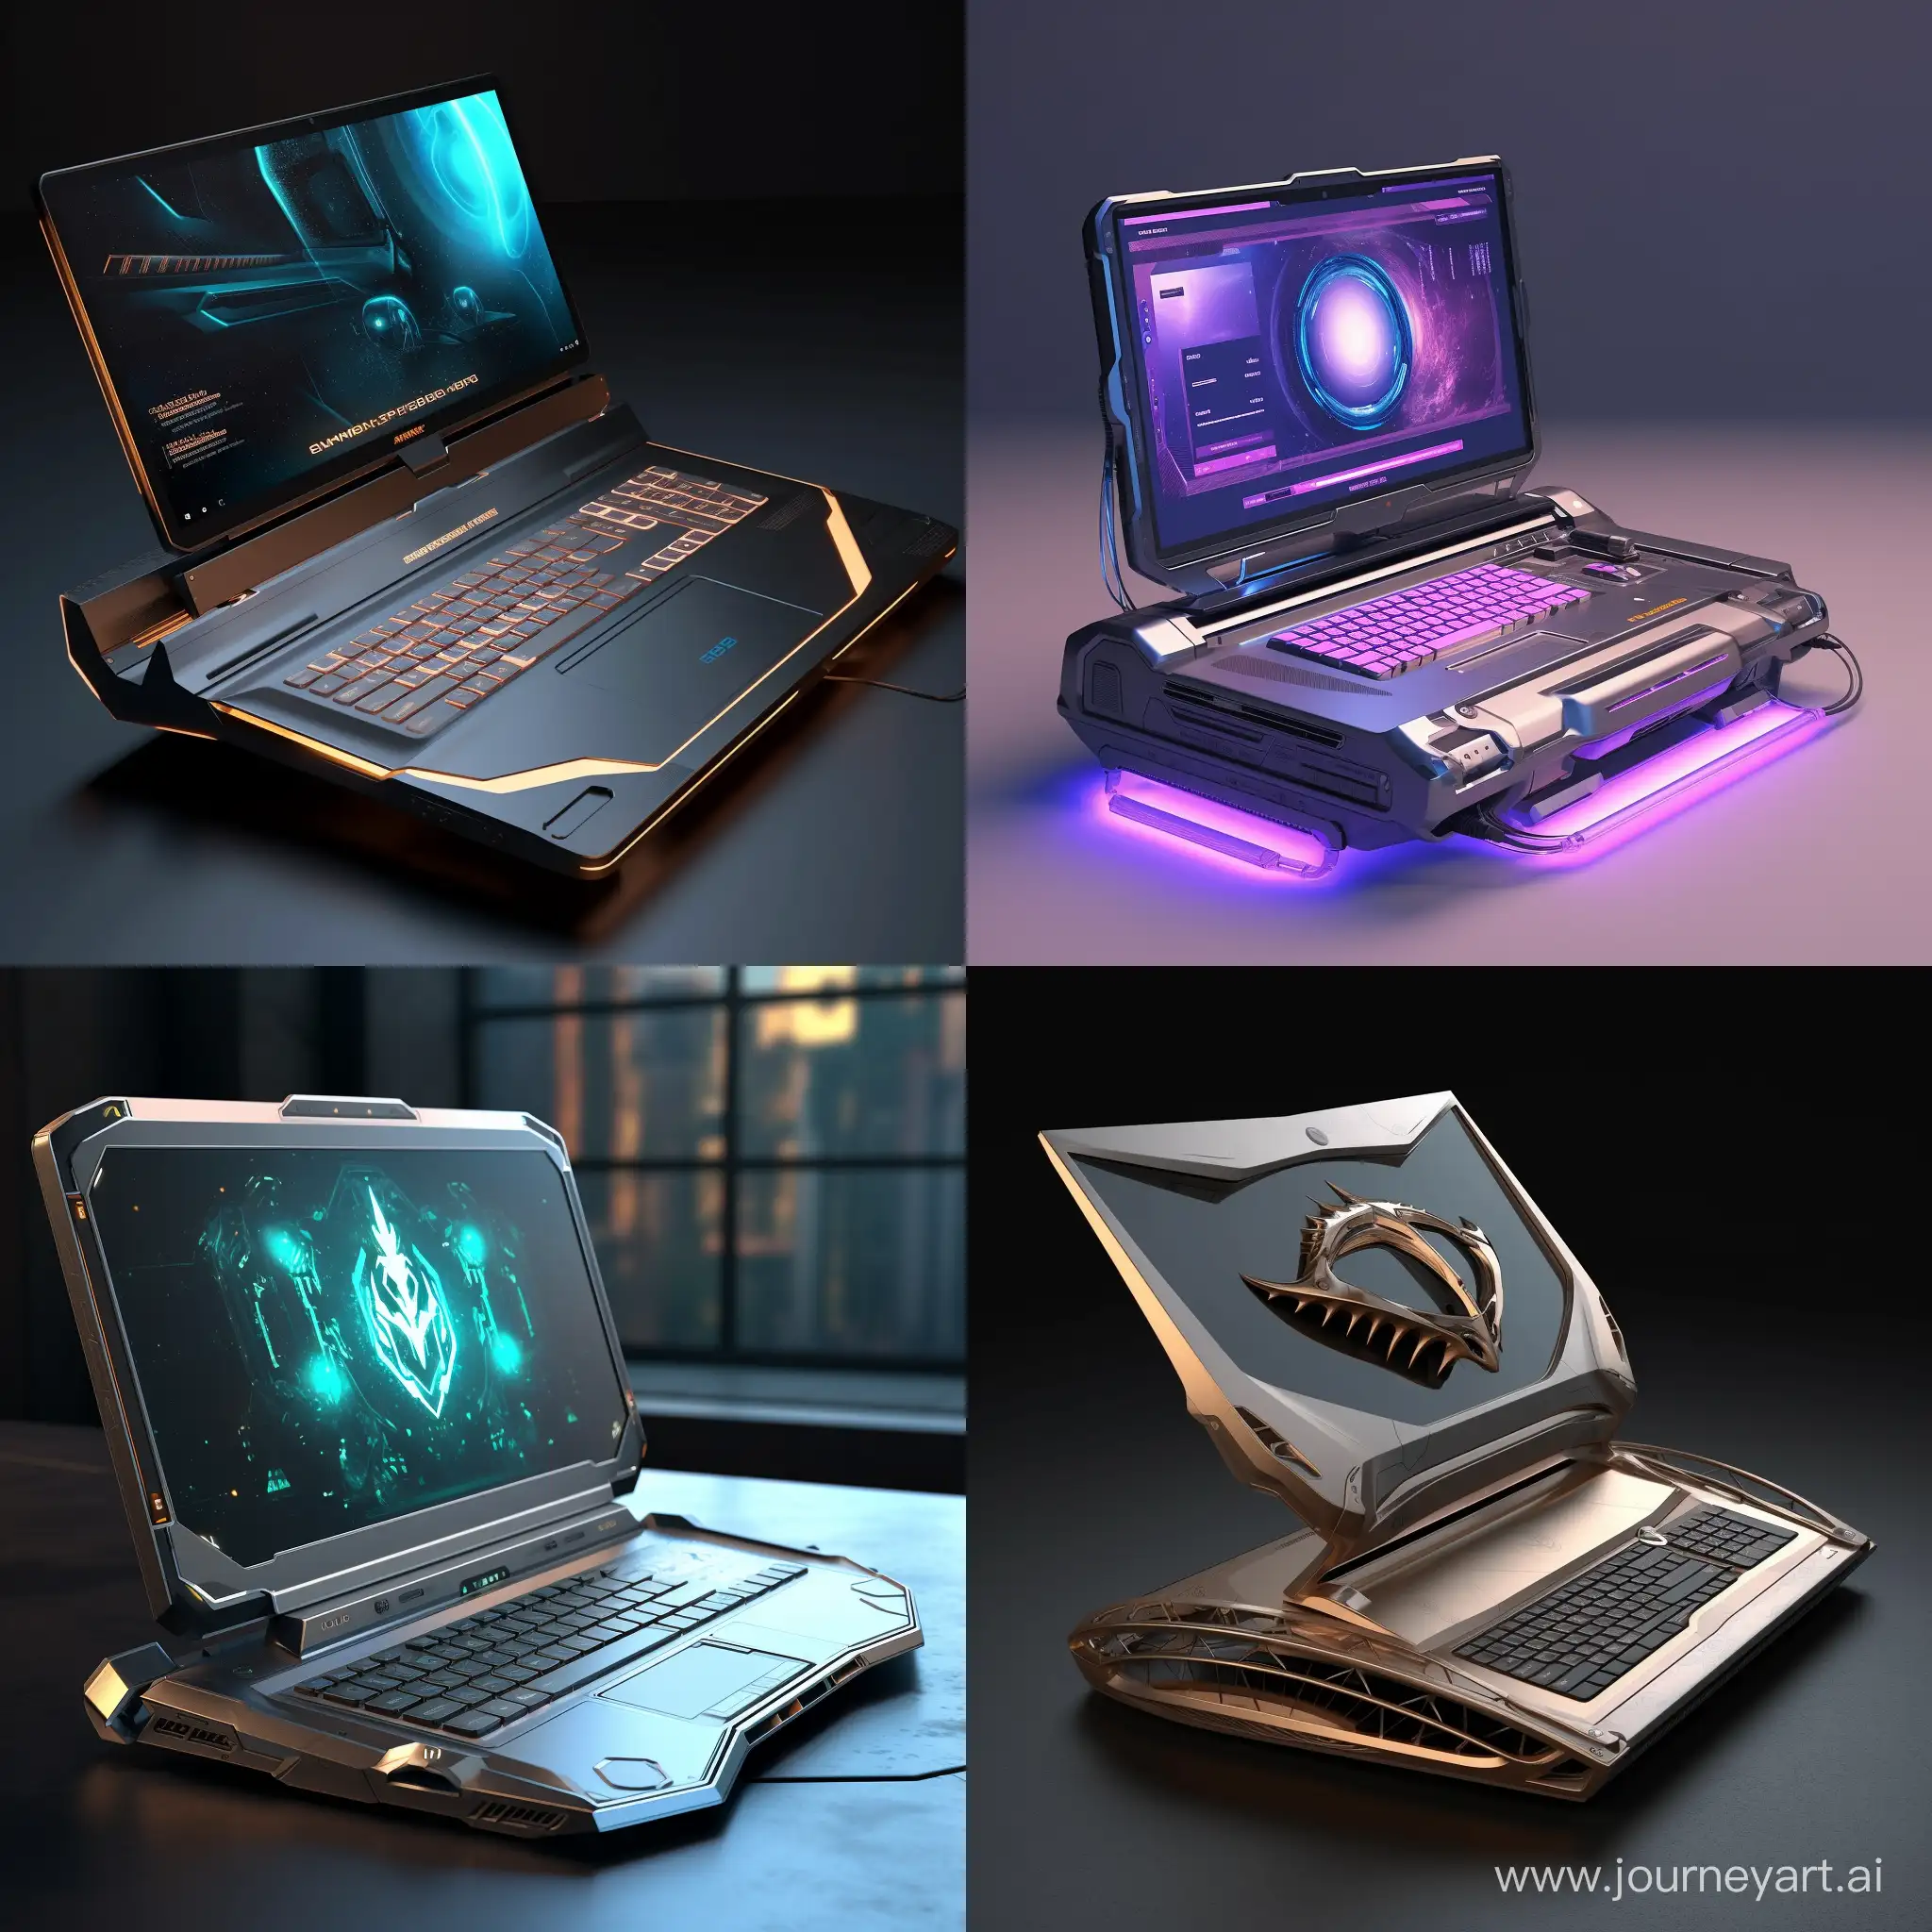 Futuristic-Laptop-with-11-Aspect-Ratio-CuttingEdge-Technology-Image